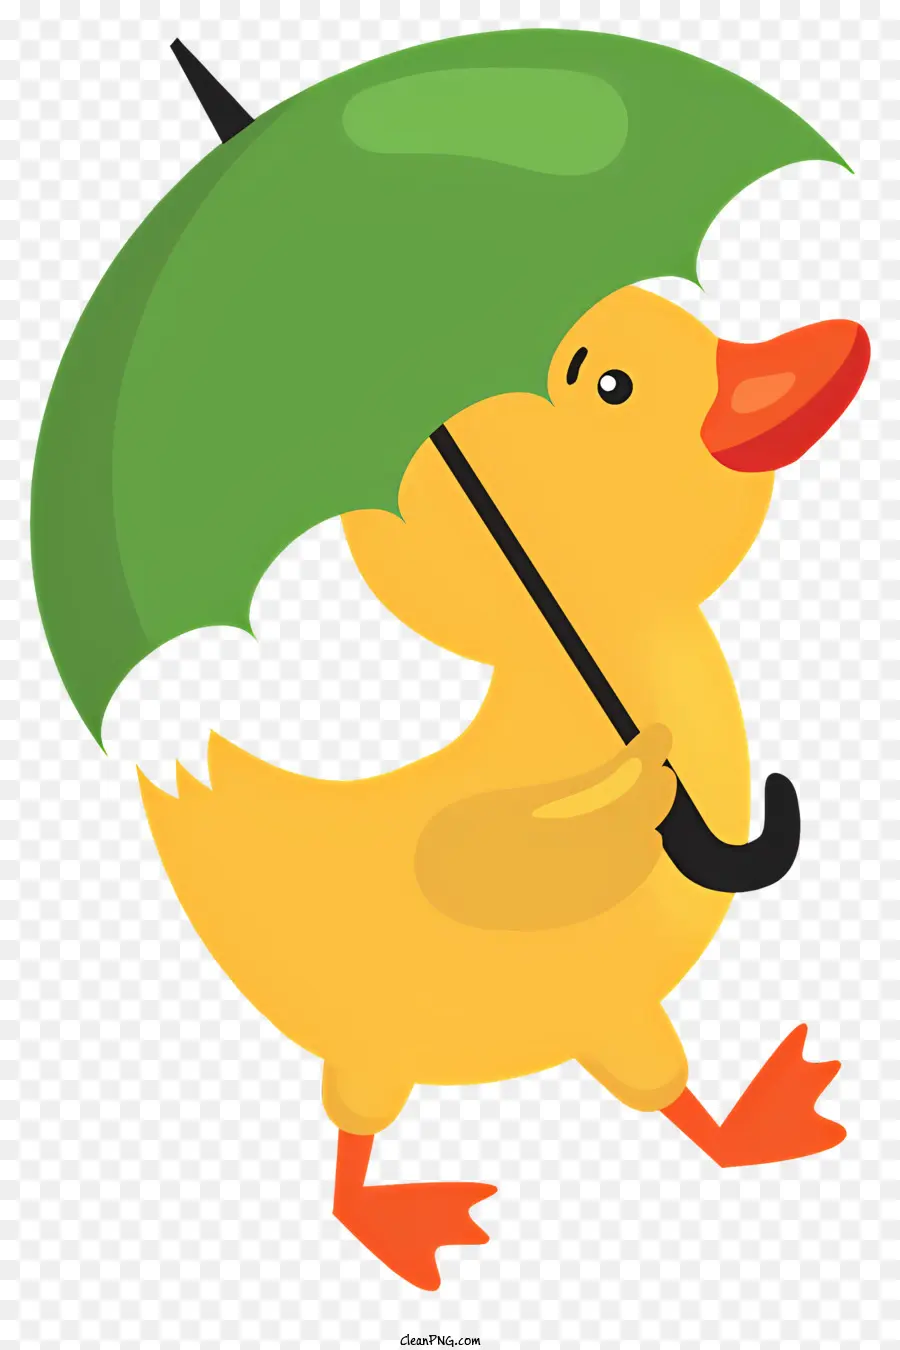 icon duck umbrella rain yellow duck